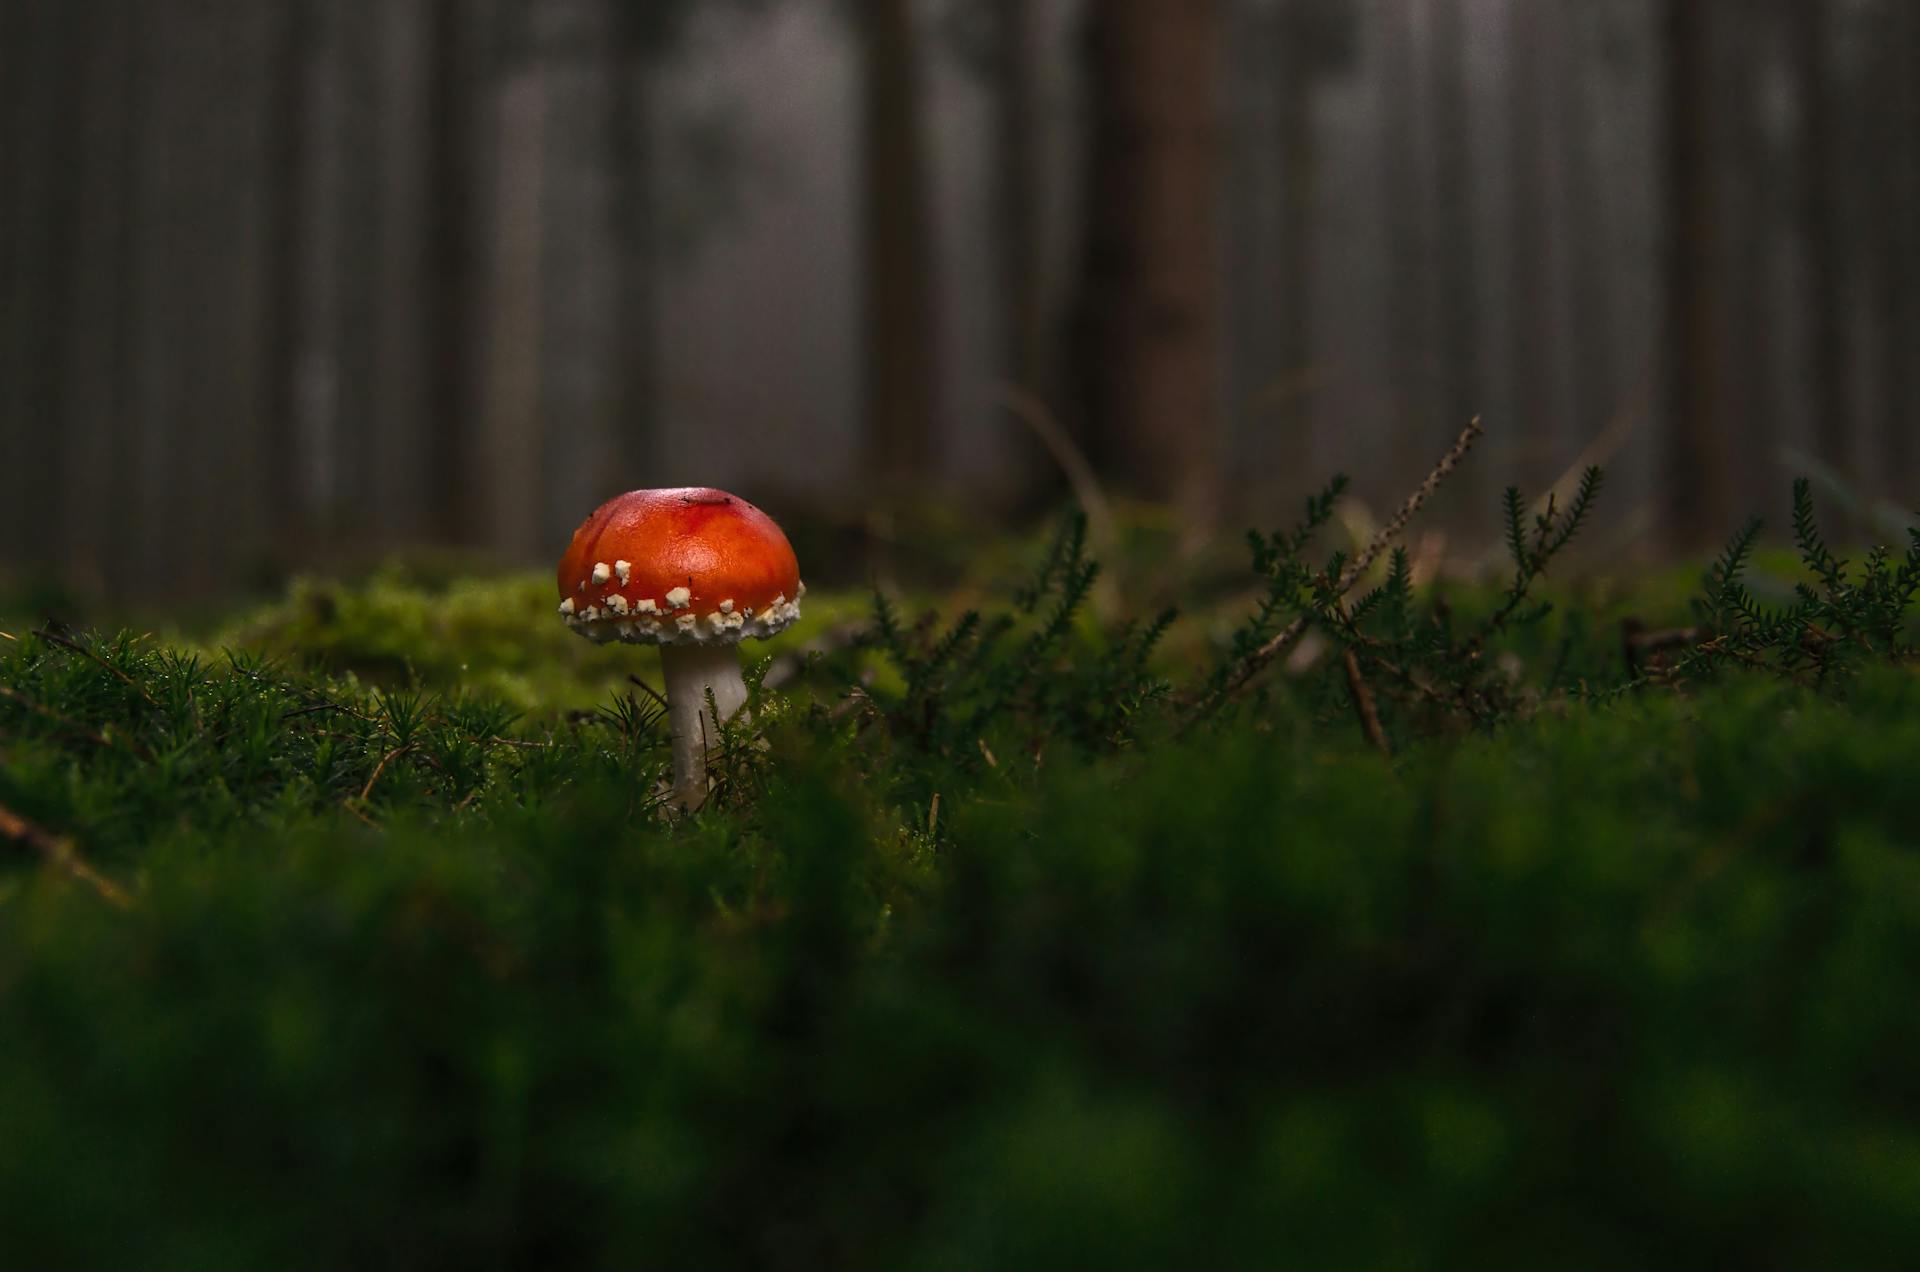 Red and White Mushroom